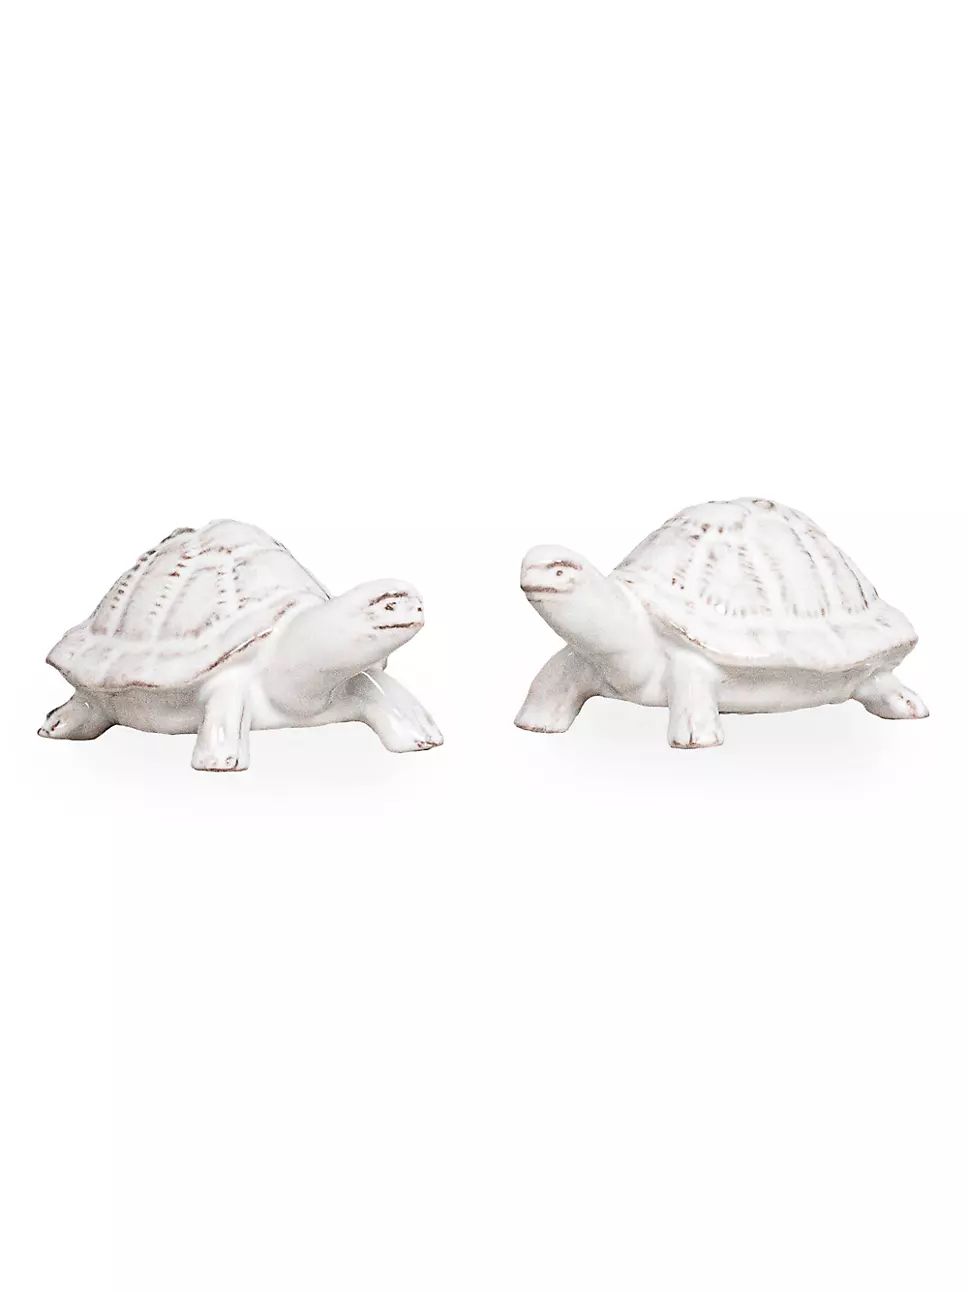 Clever Creatures Turtle Salt & Pepper Set | Saks Fifth Avenue